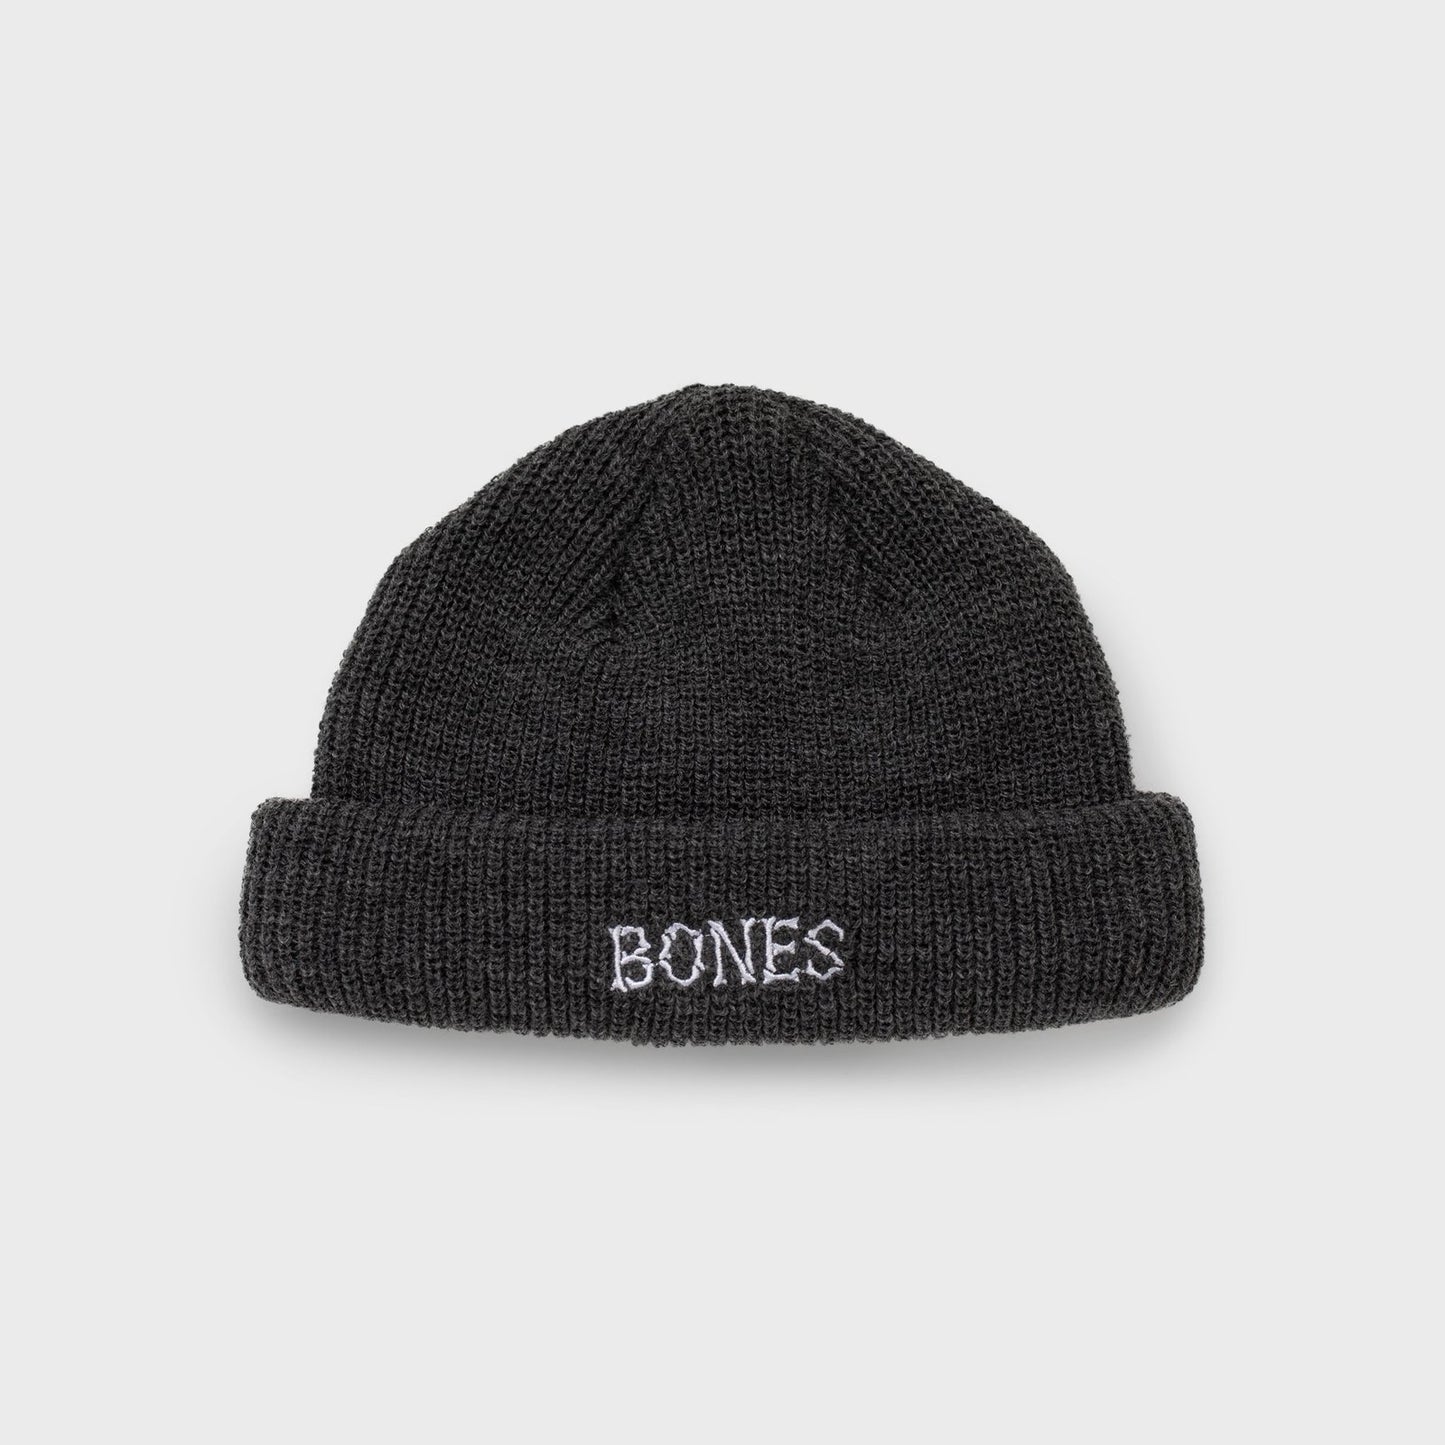 Grey Bones - Docker knit Beanie